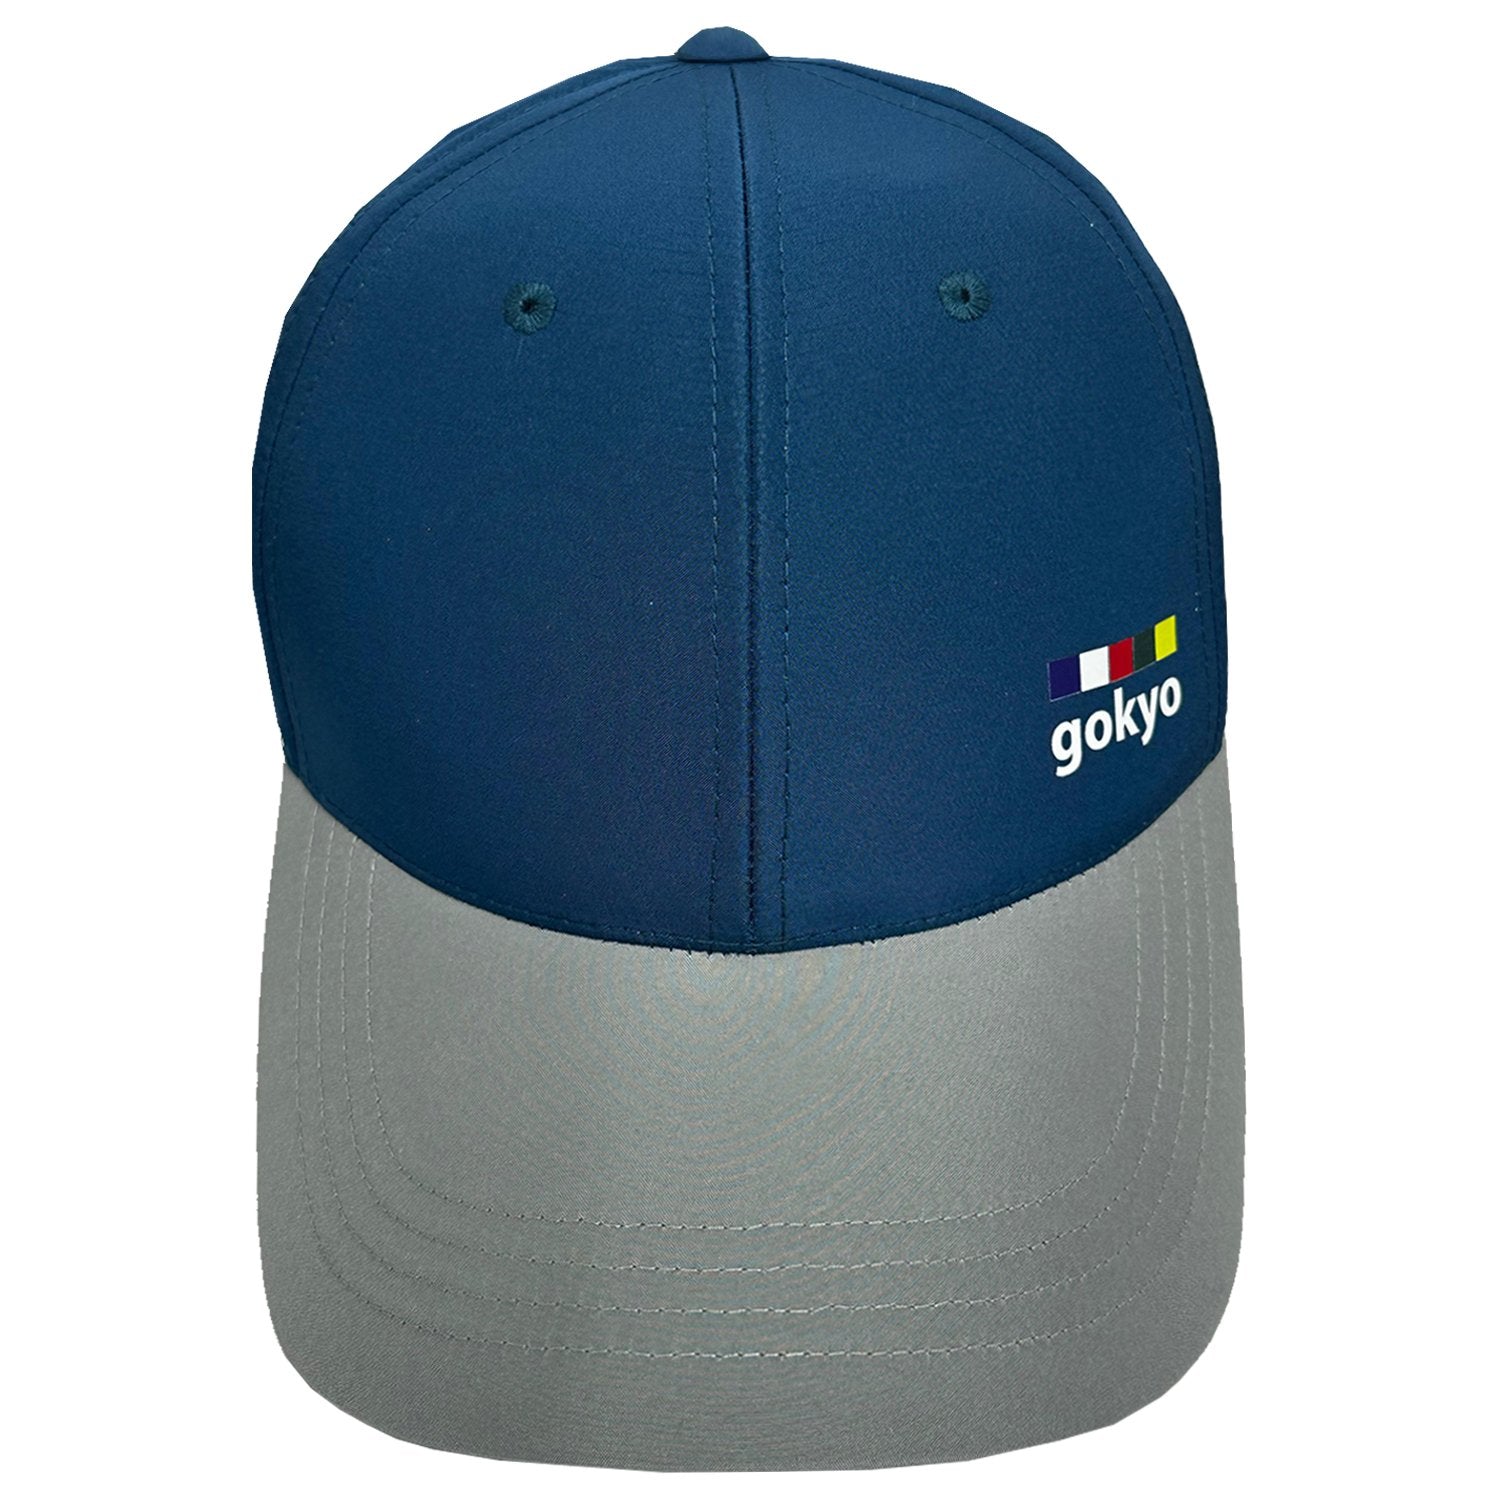 Buy Gokyo Kalimpong Dry Fit Cap | Caps at Gokyo Outdoor Clothing & Gear